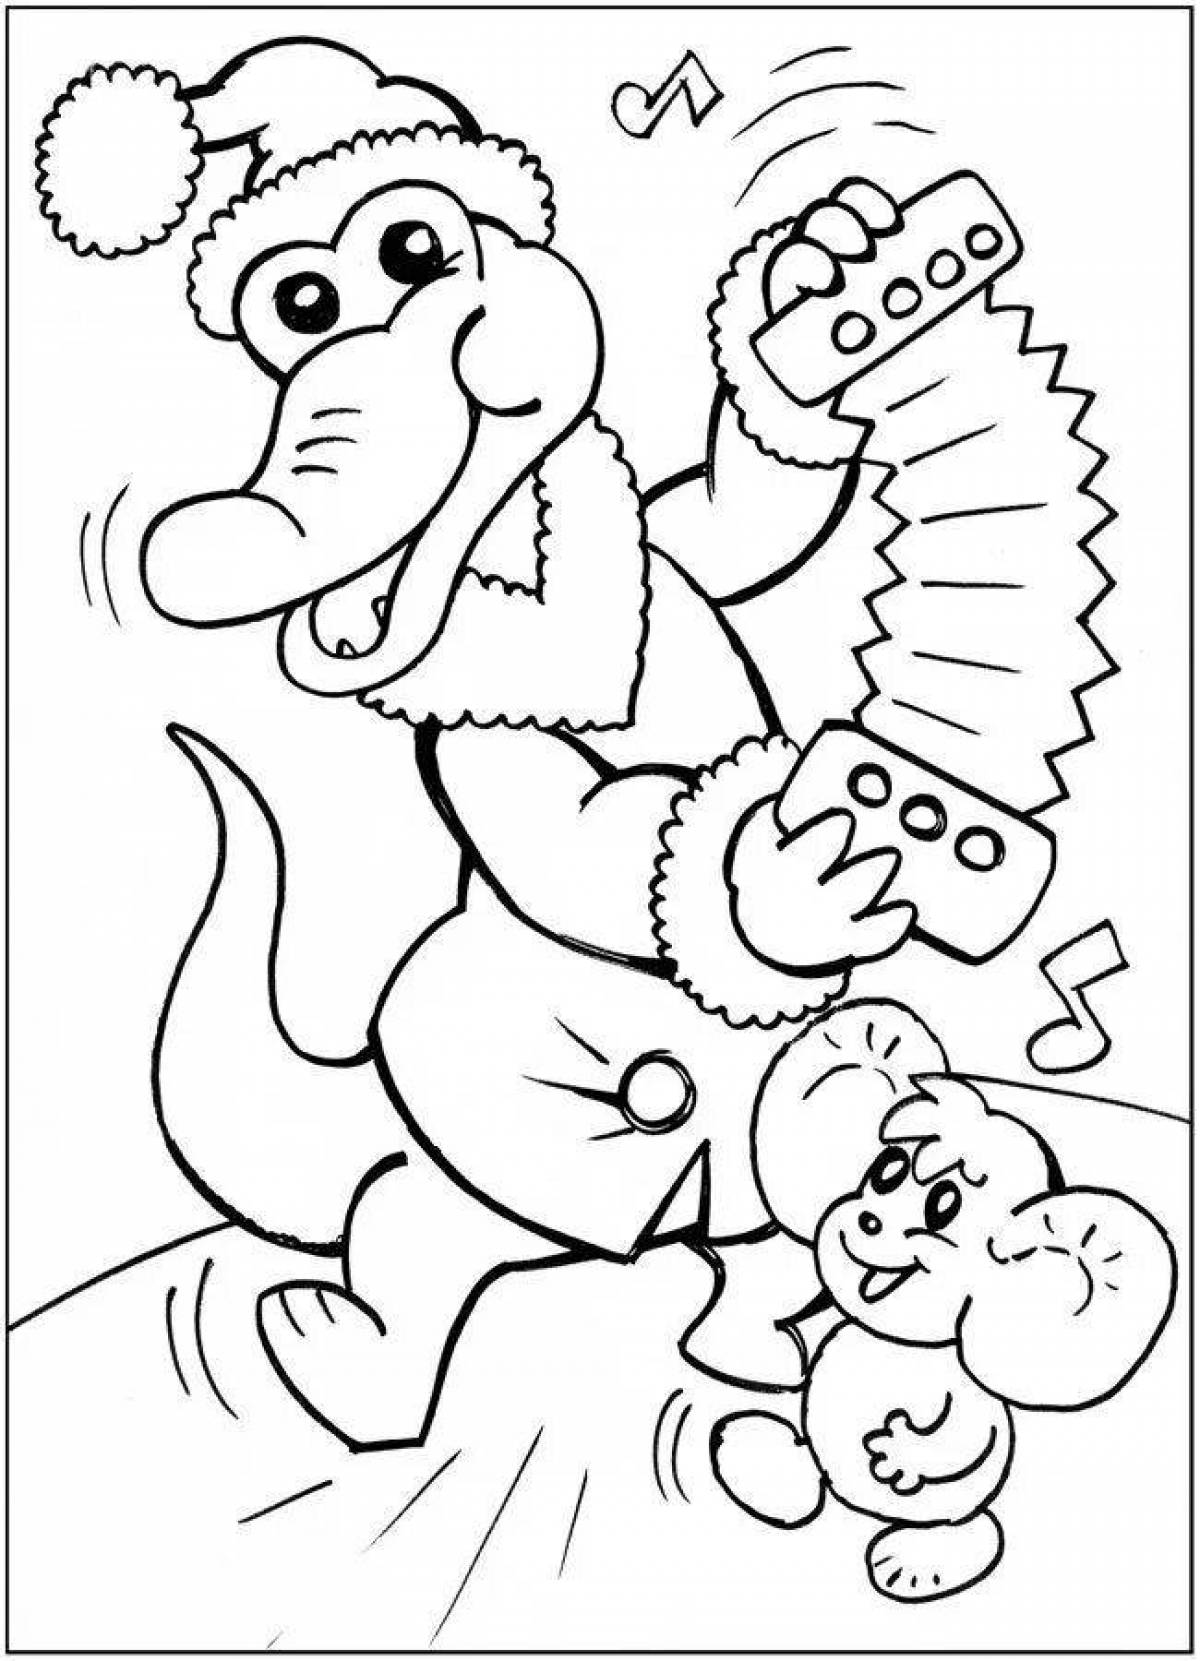 Cheburashka inspirational coloring book